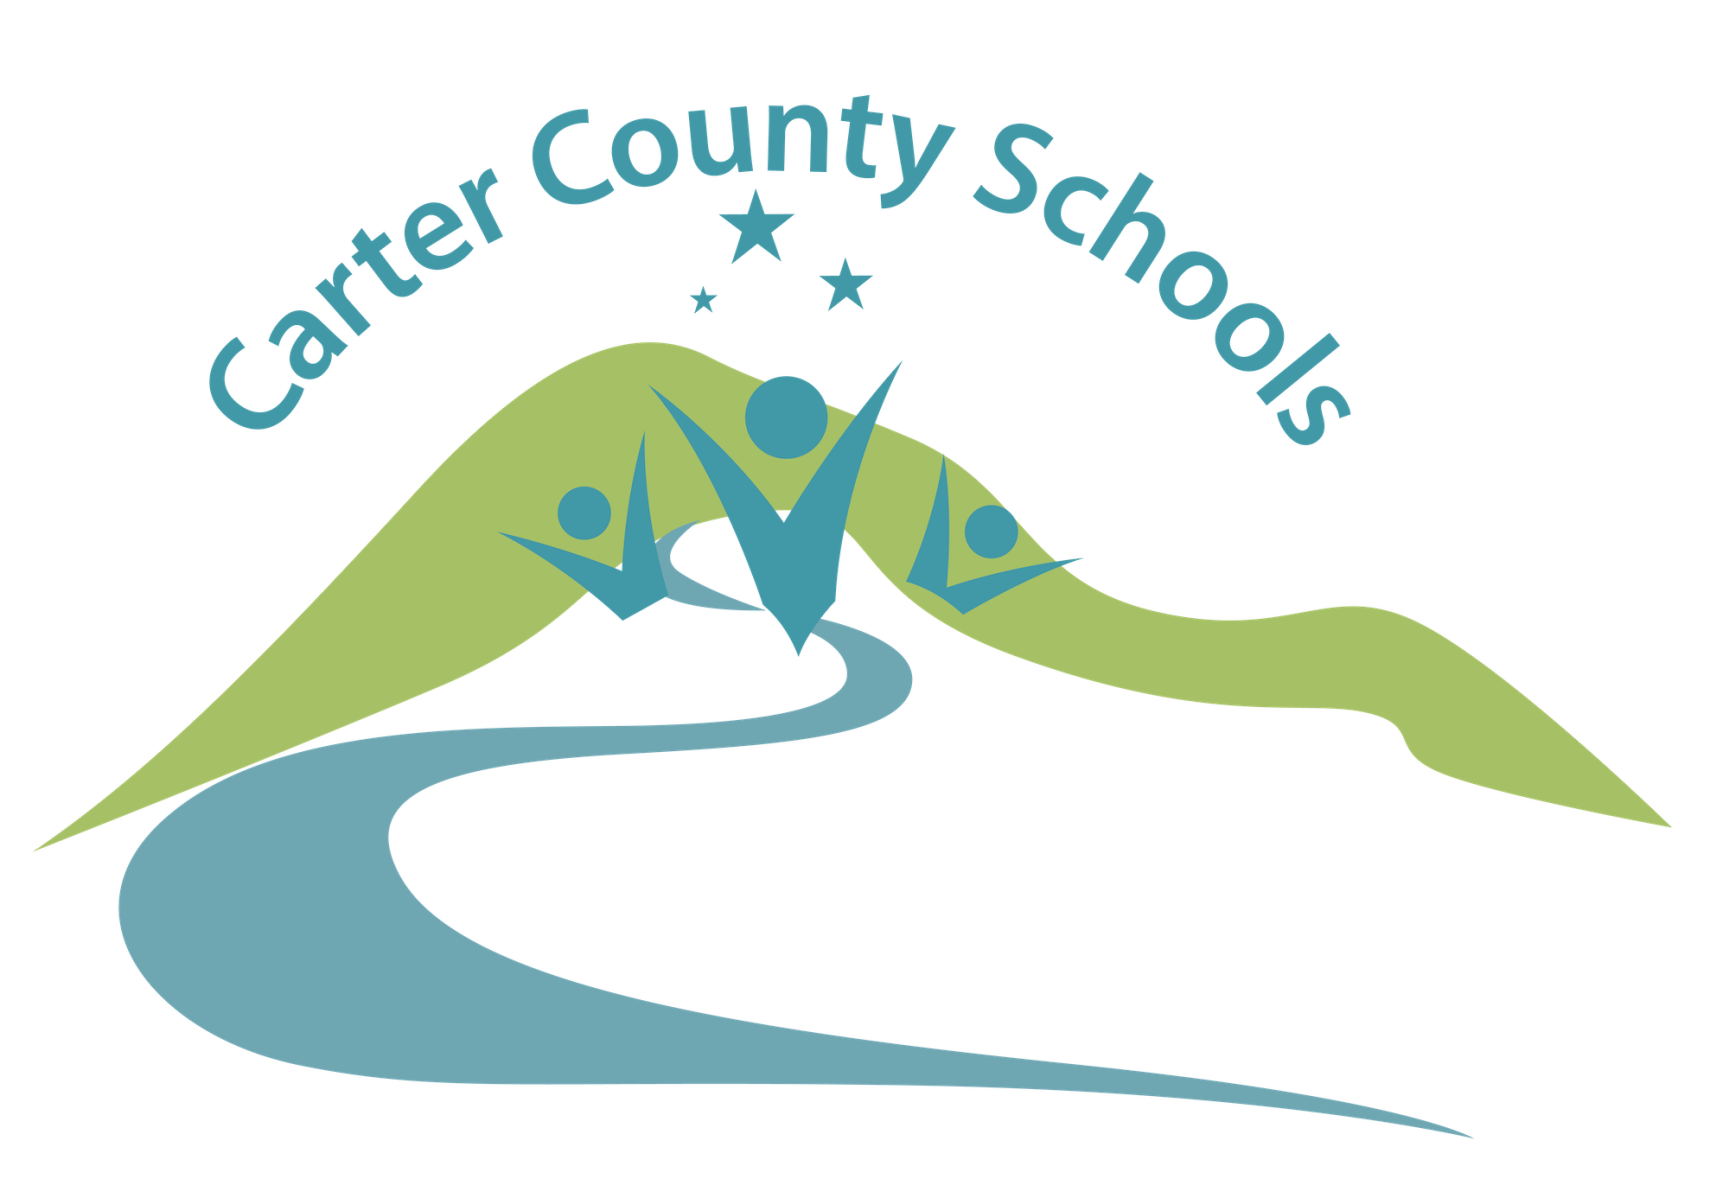 Carter School Board ready to return to normal school year | News